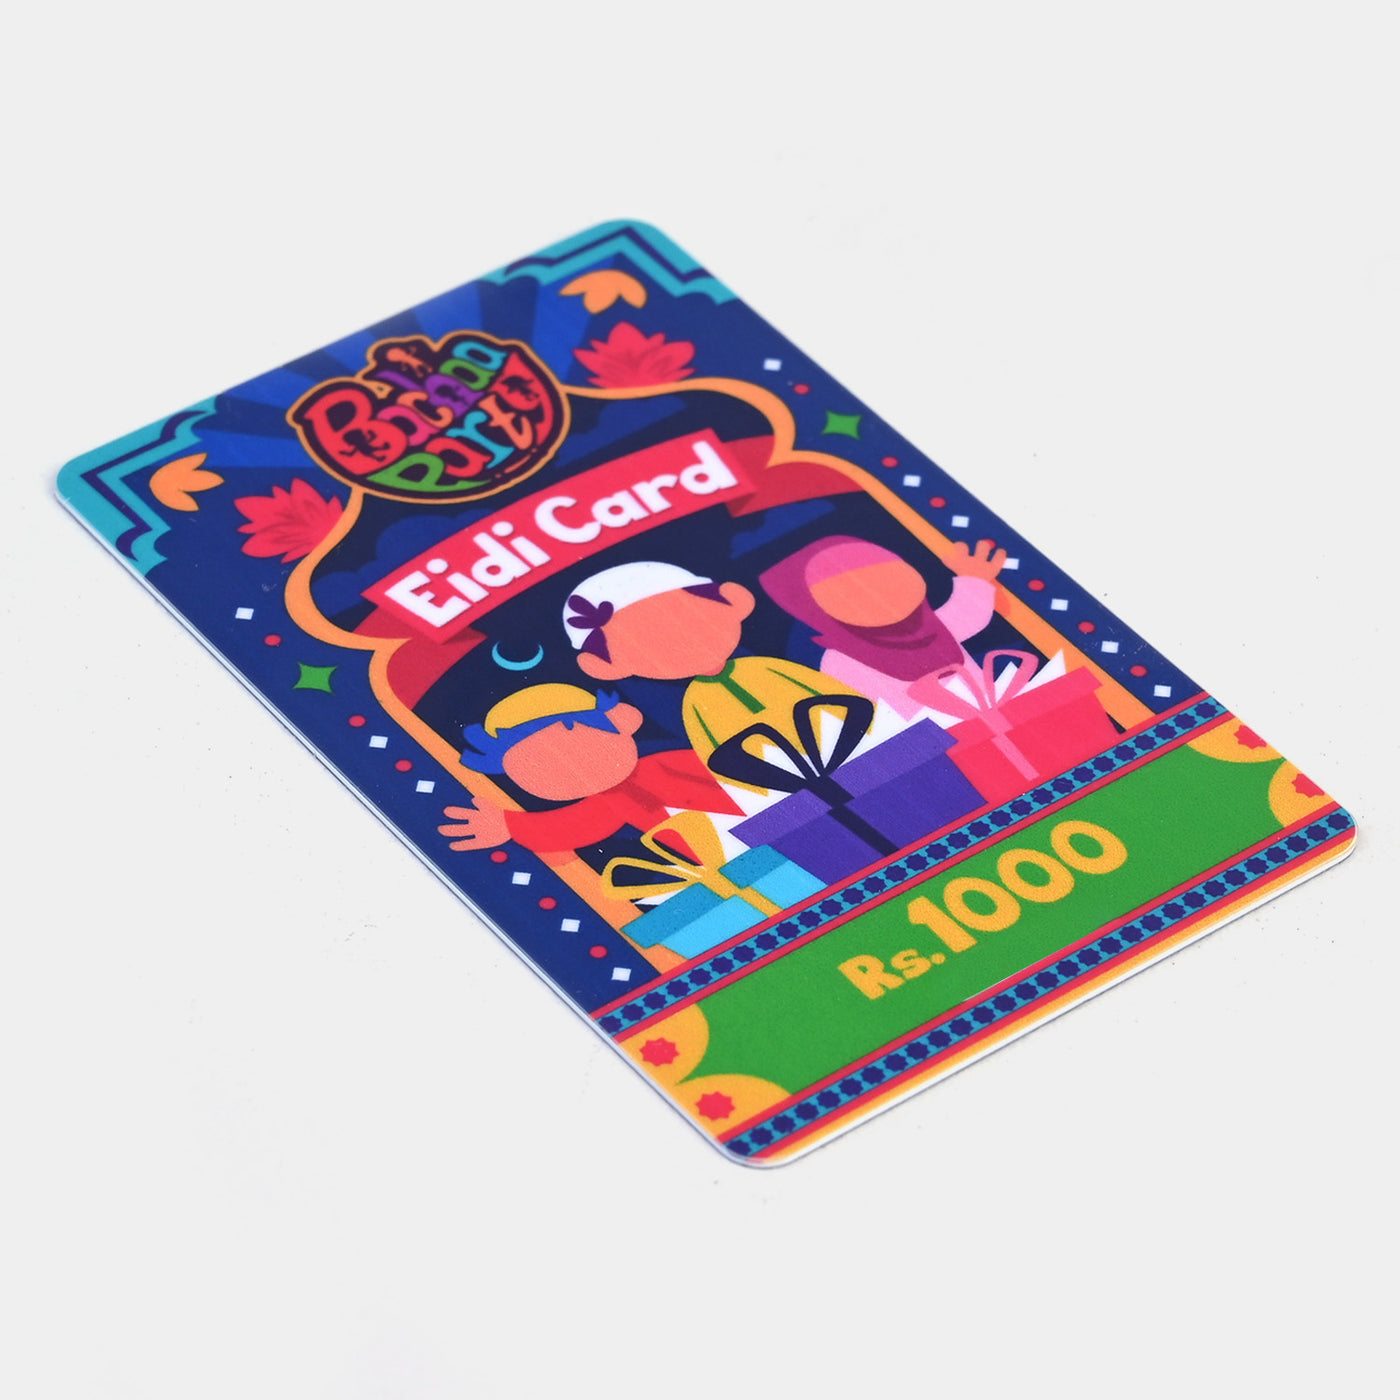 Bachaa Party Eidi Gift Card | Rs.1000